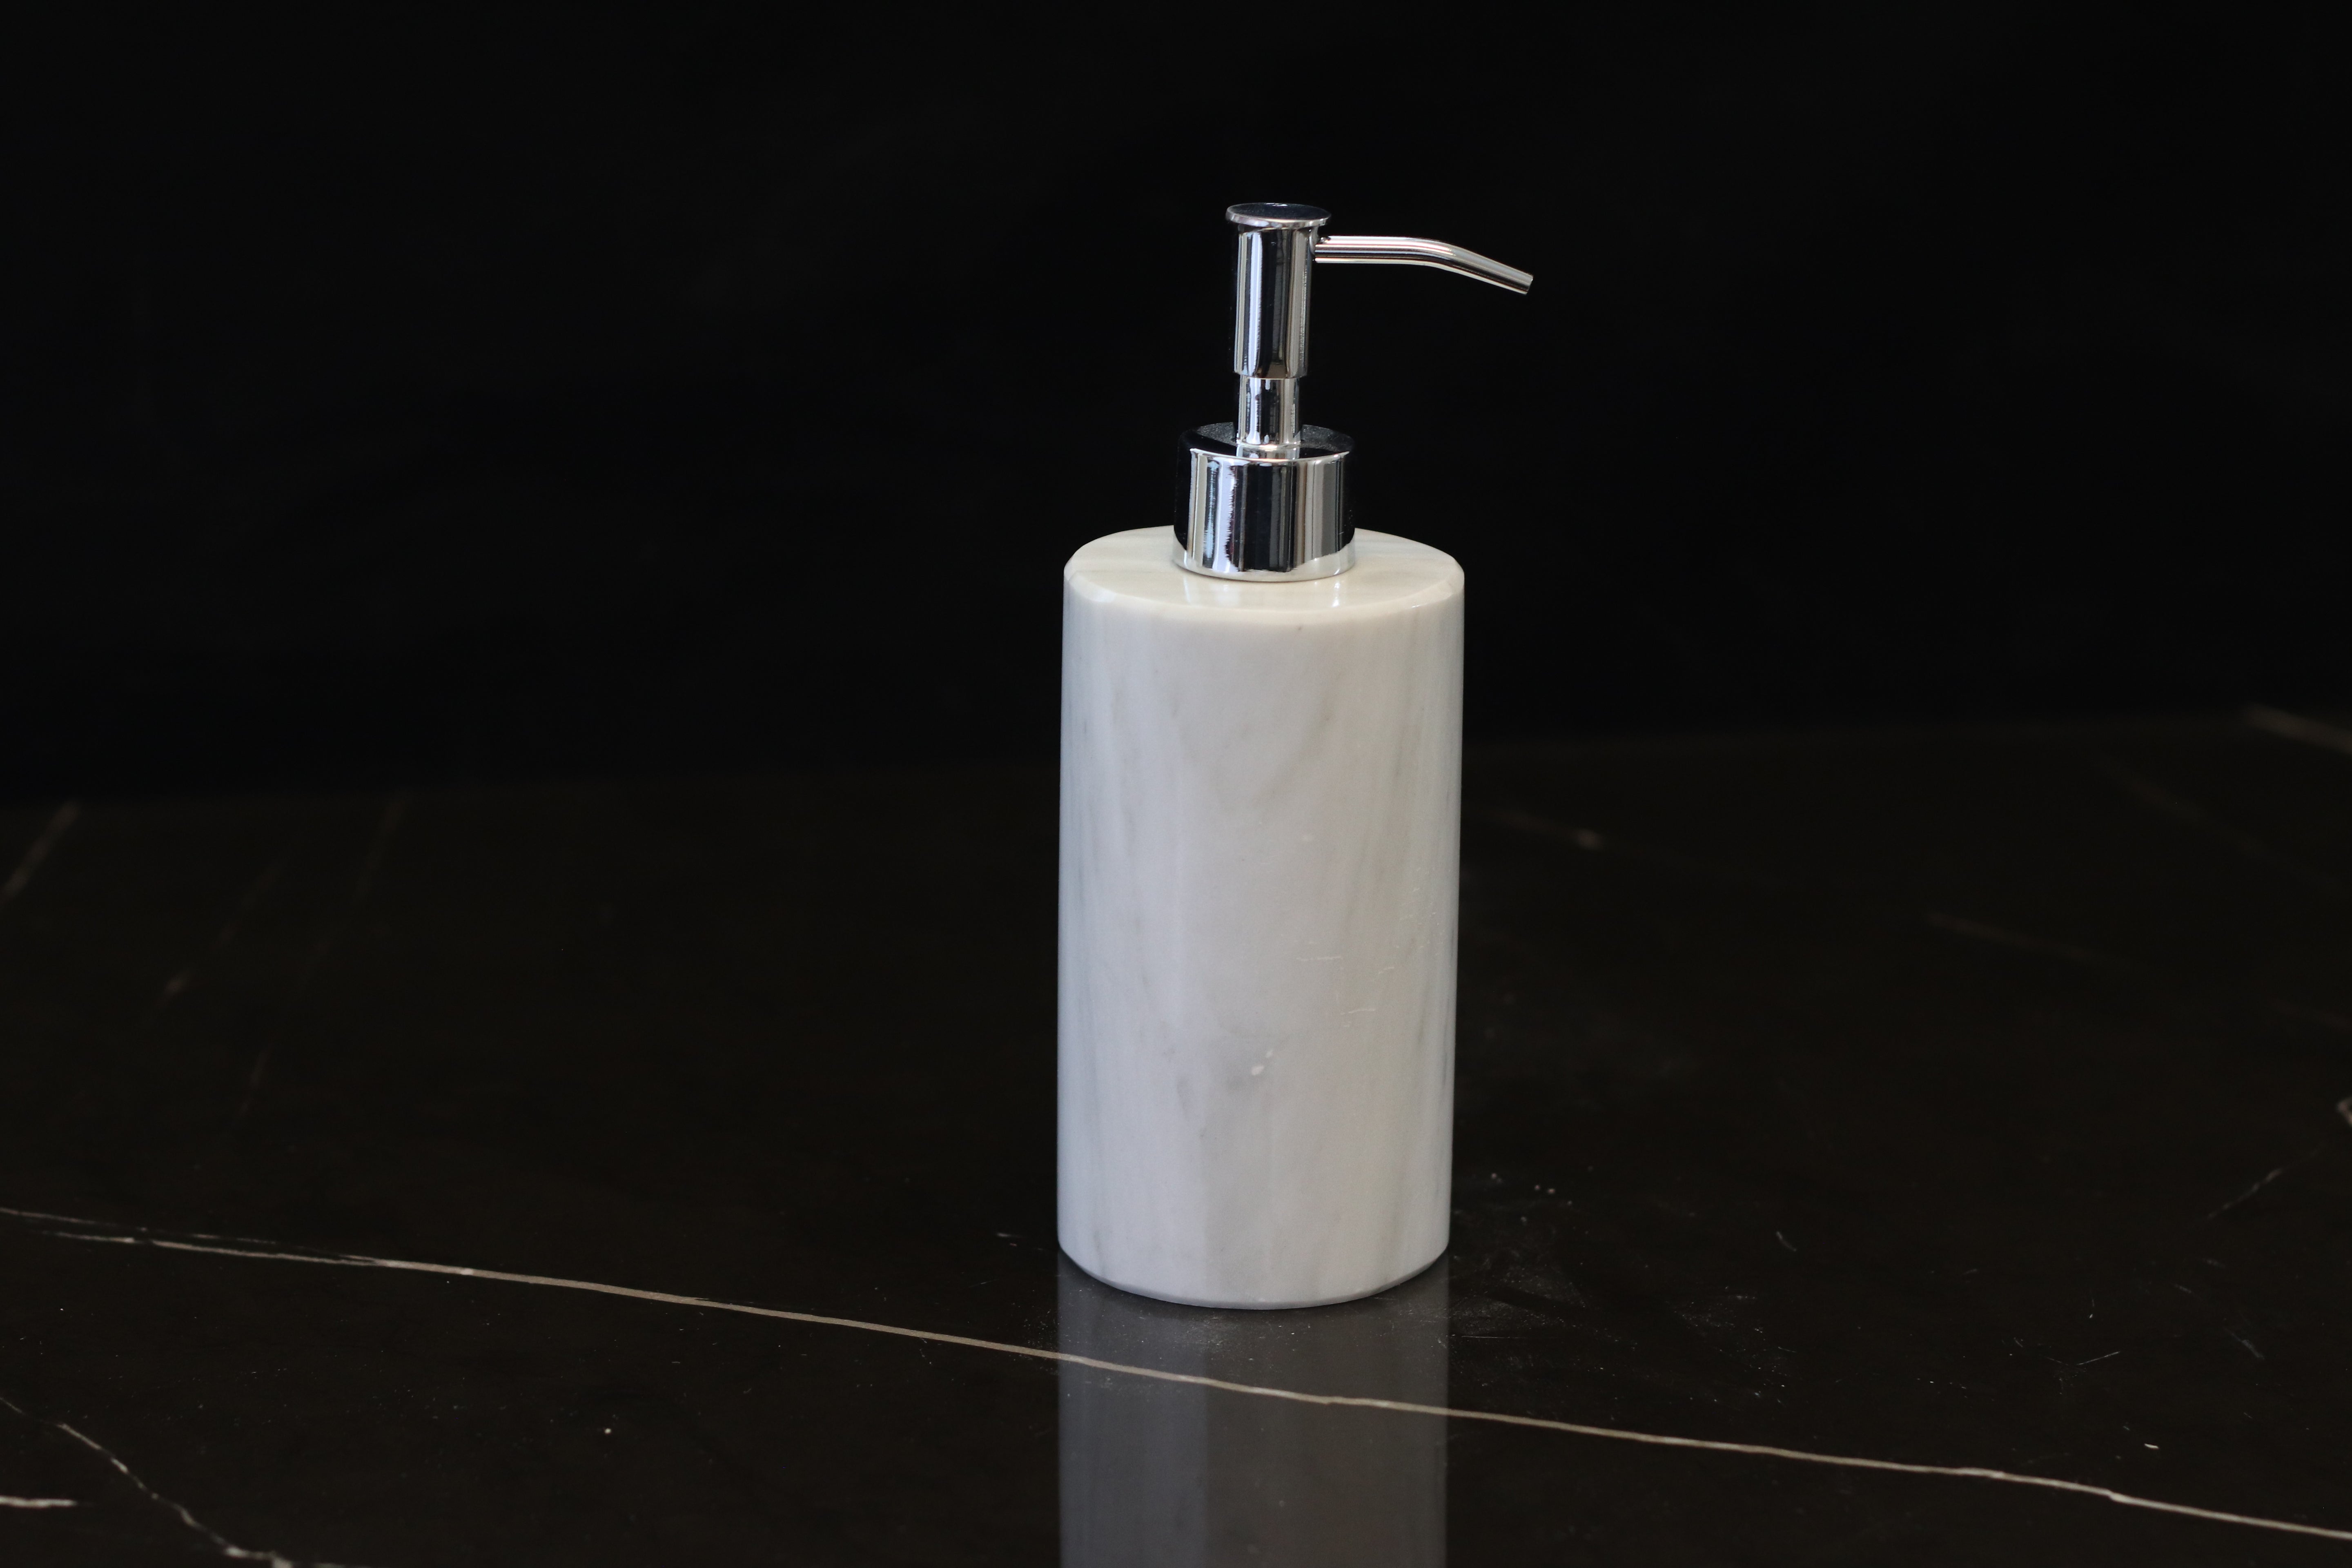 Onyx Stone Liquid Soap or Lotion Dispenser. Nickel Spout. Handmade. Buy Now at www.felipeandgrace.com.